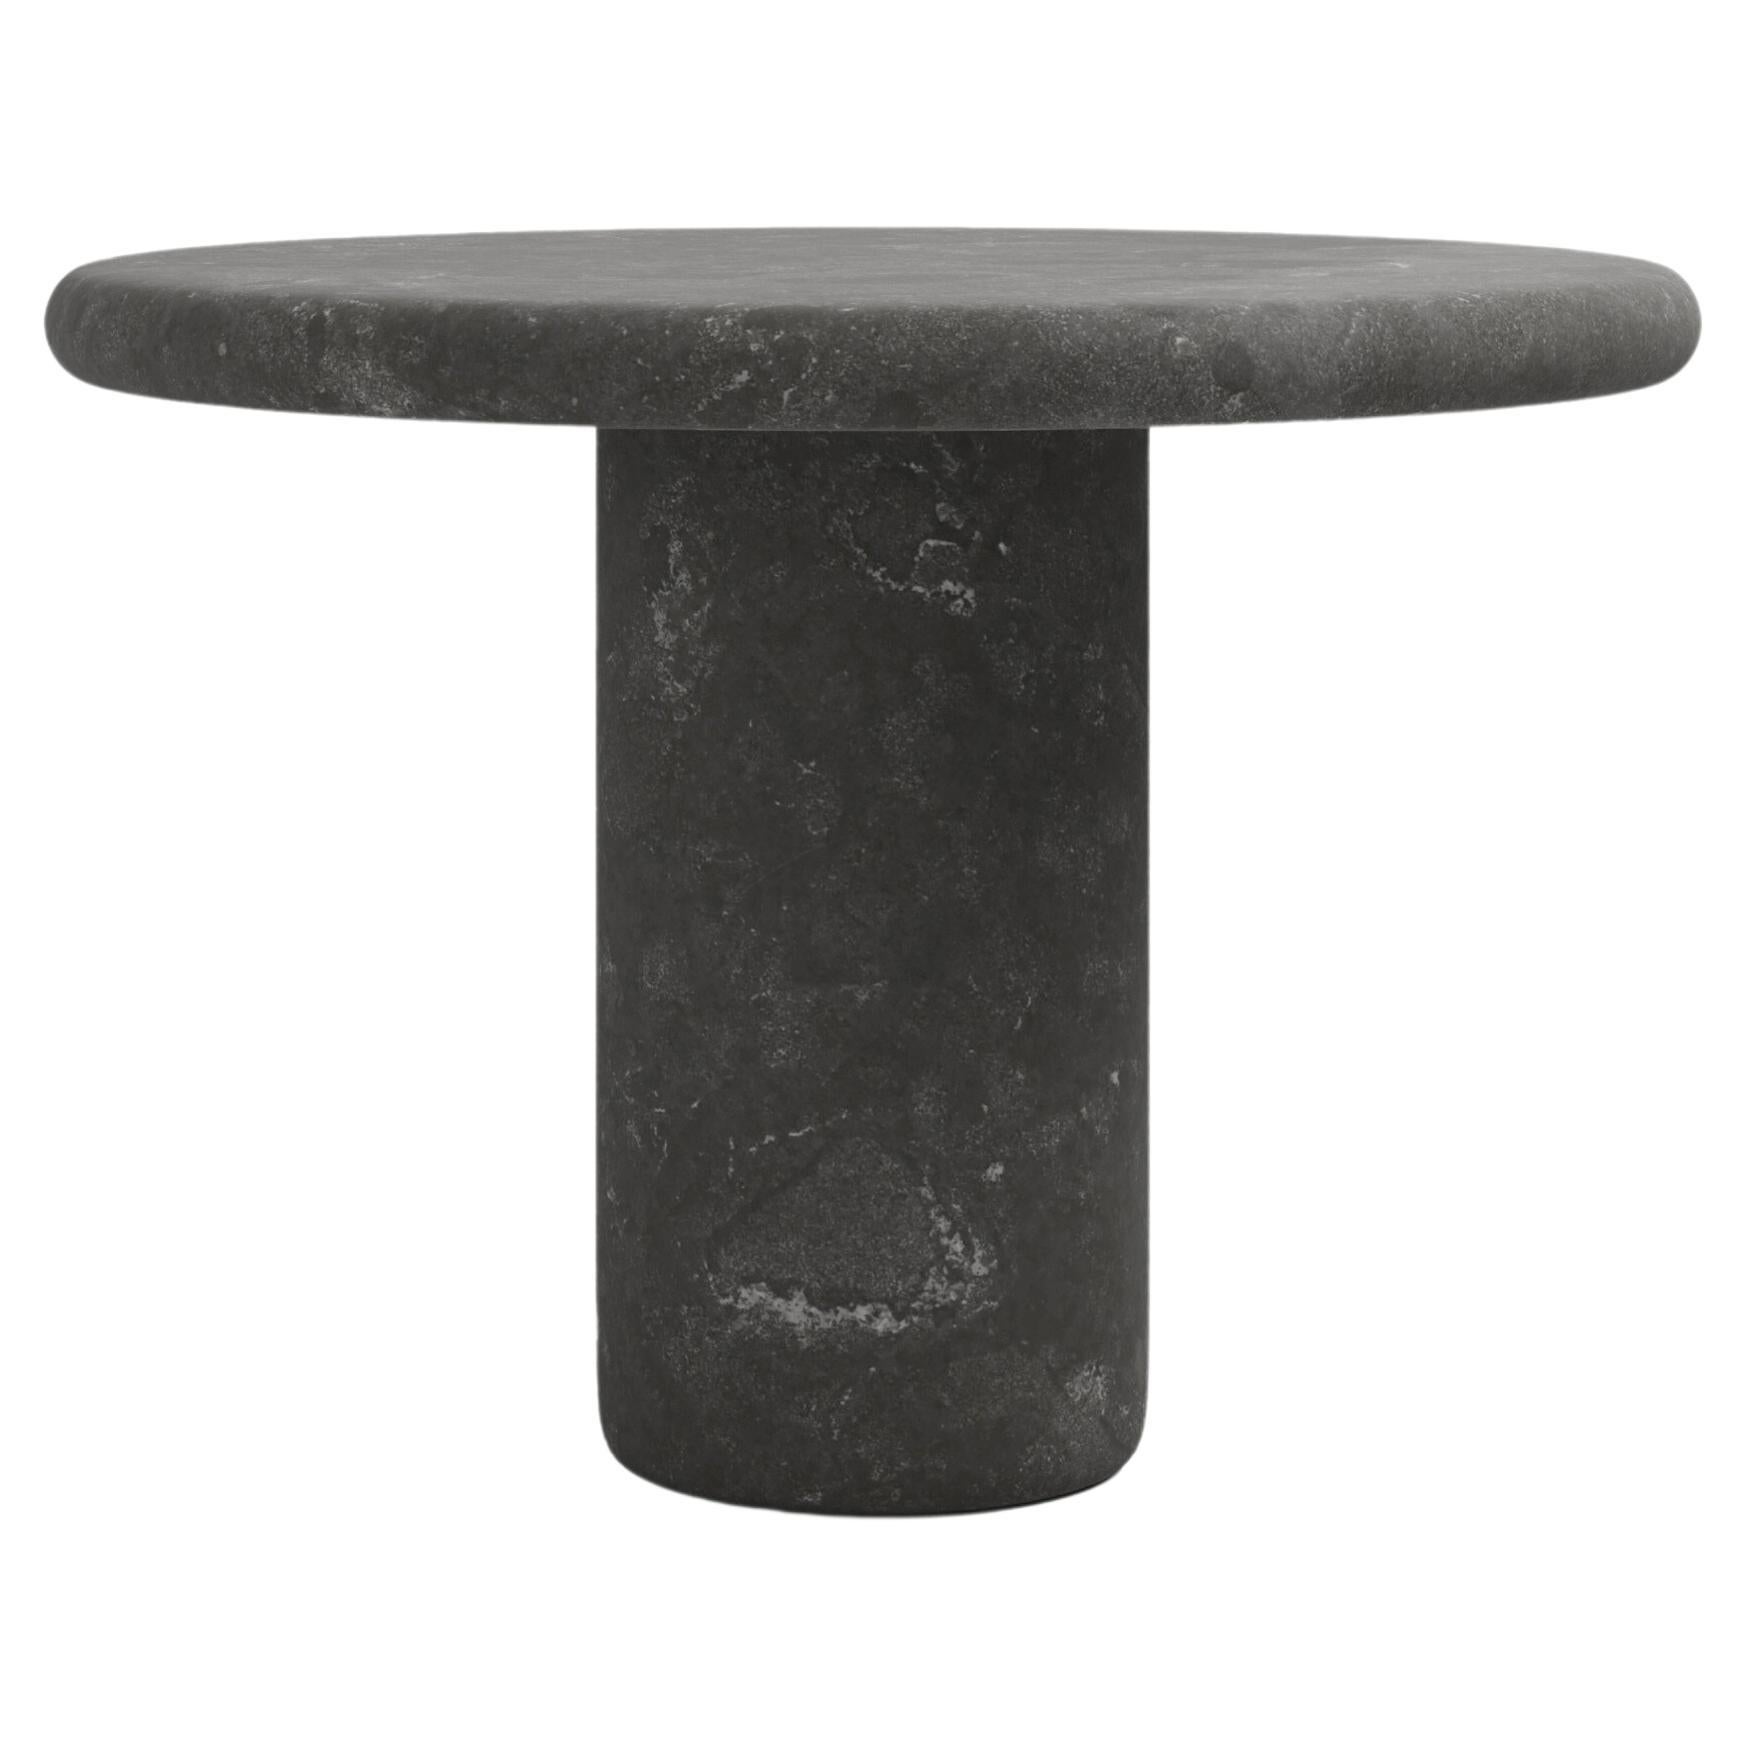 FORM(LA) Luna Round Dining Table 42”L x 42”W x 30”H Nero Petite Granite